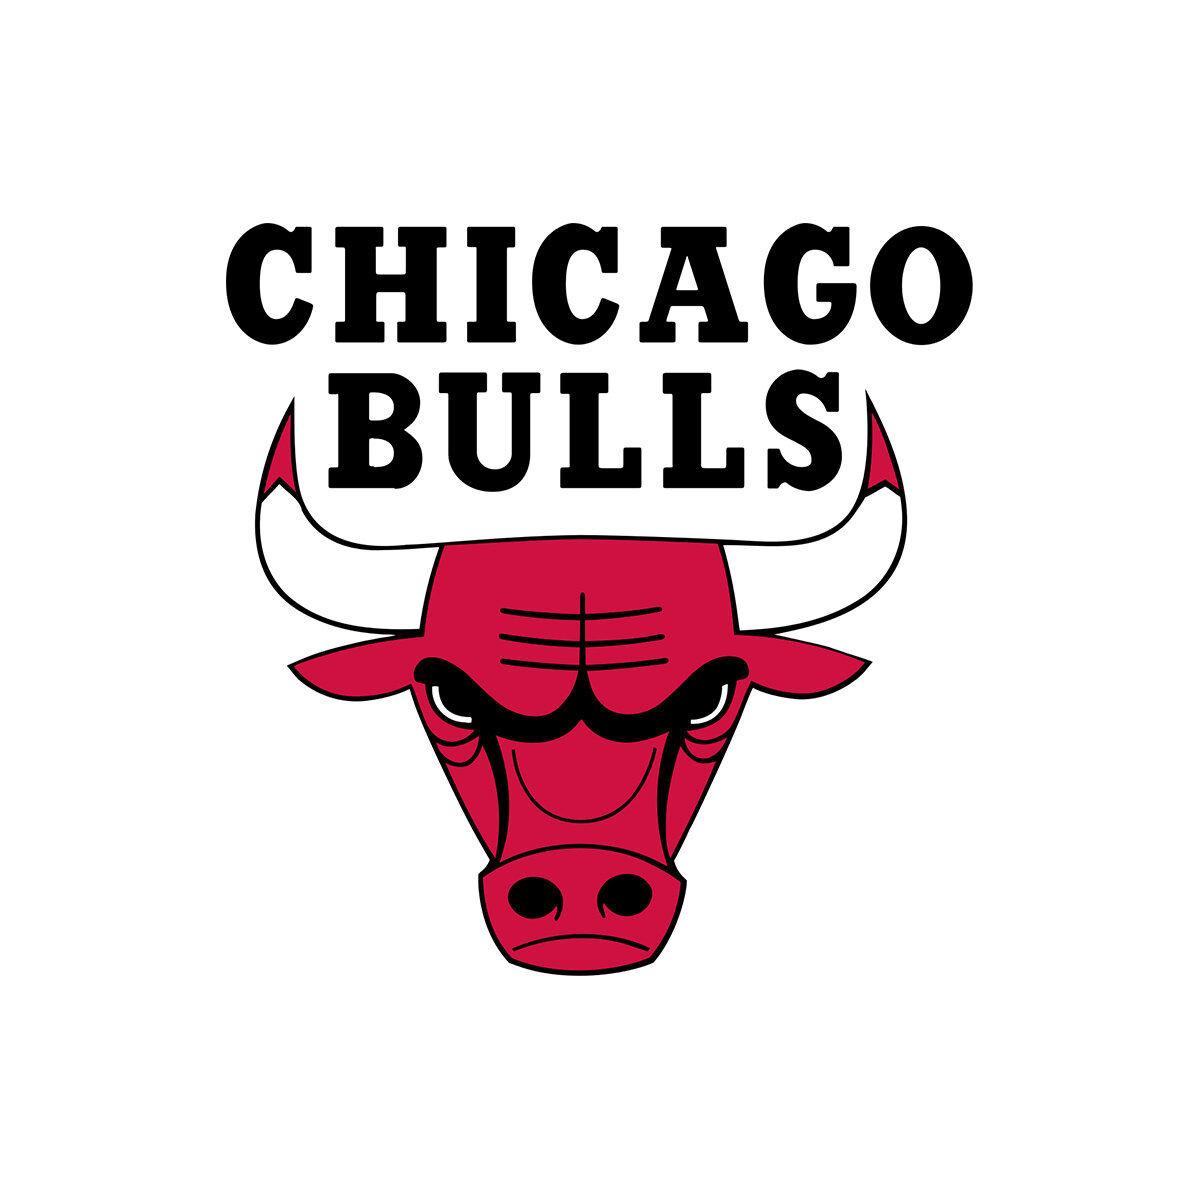 Bulls.jpg